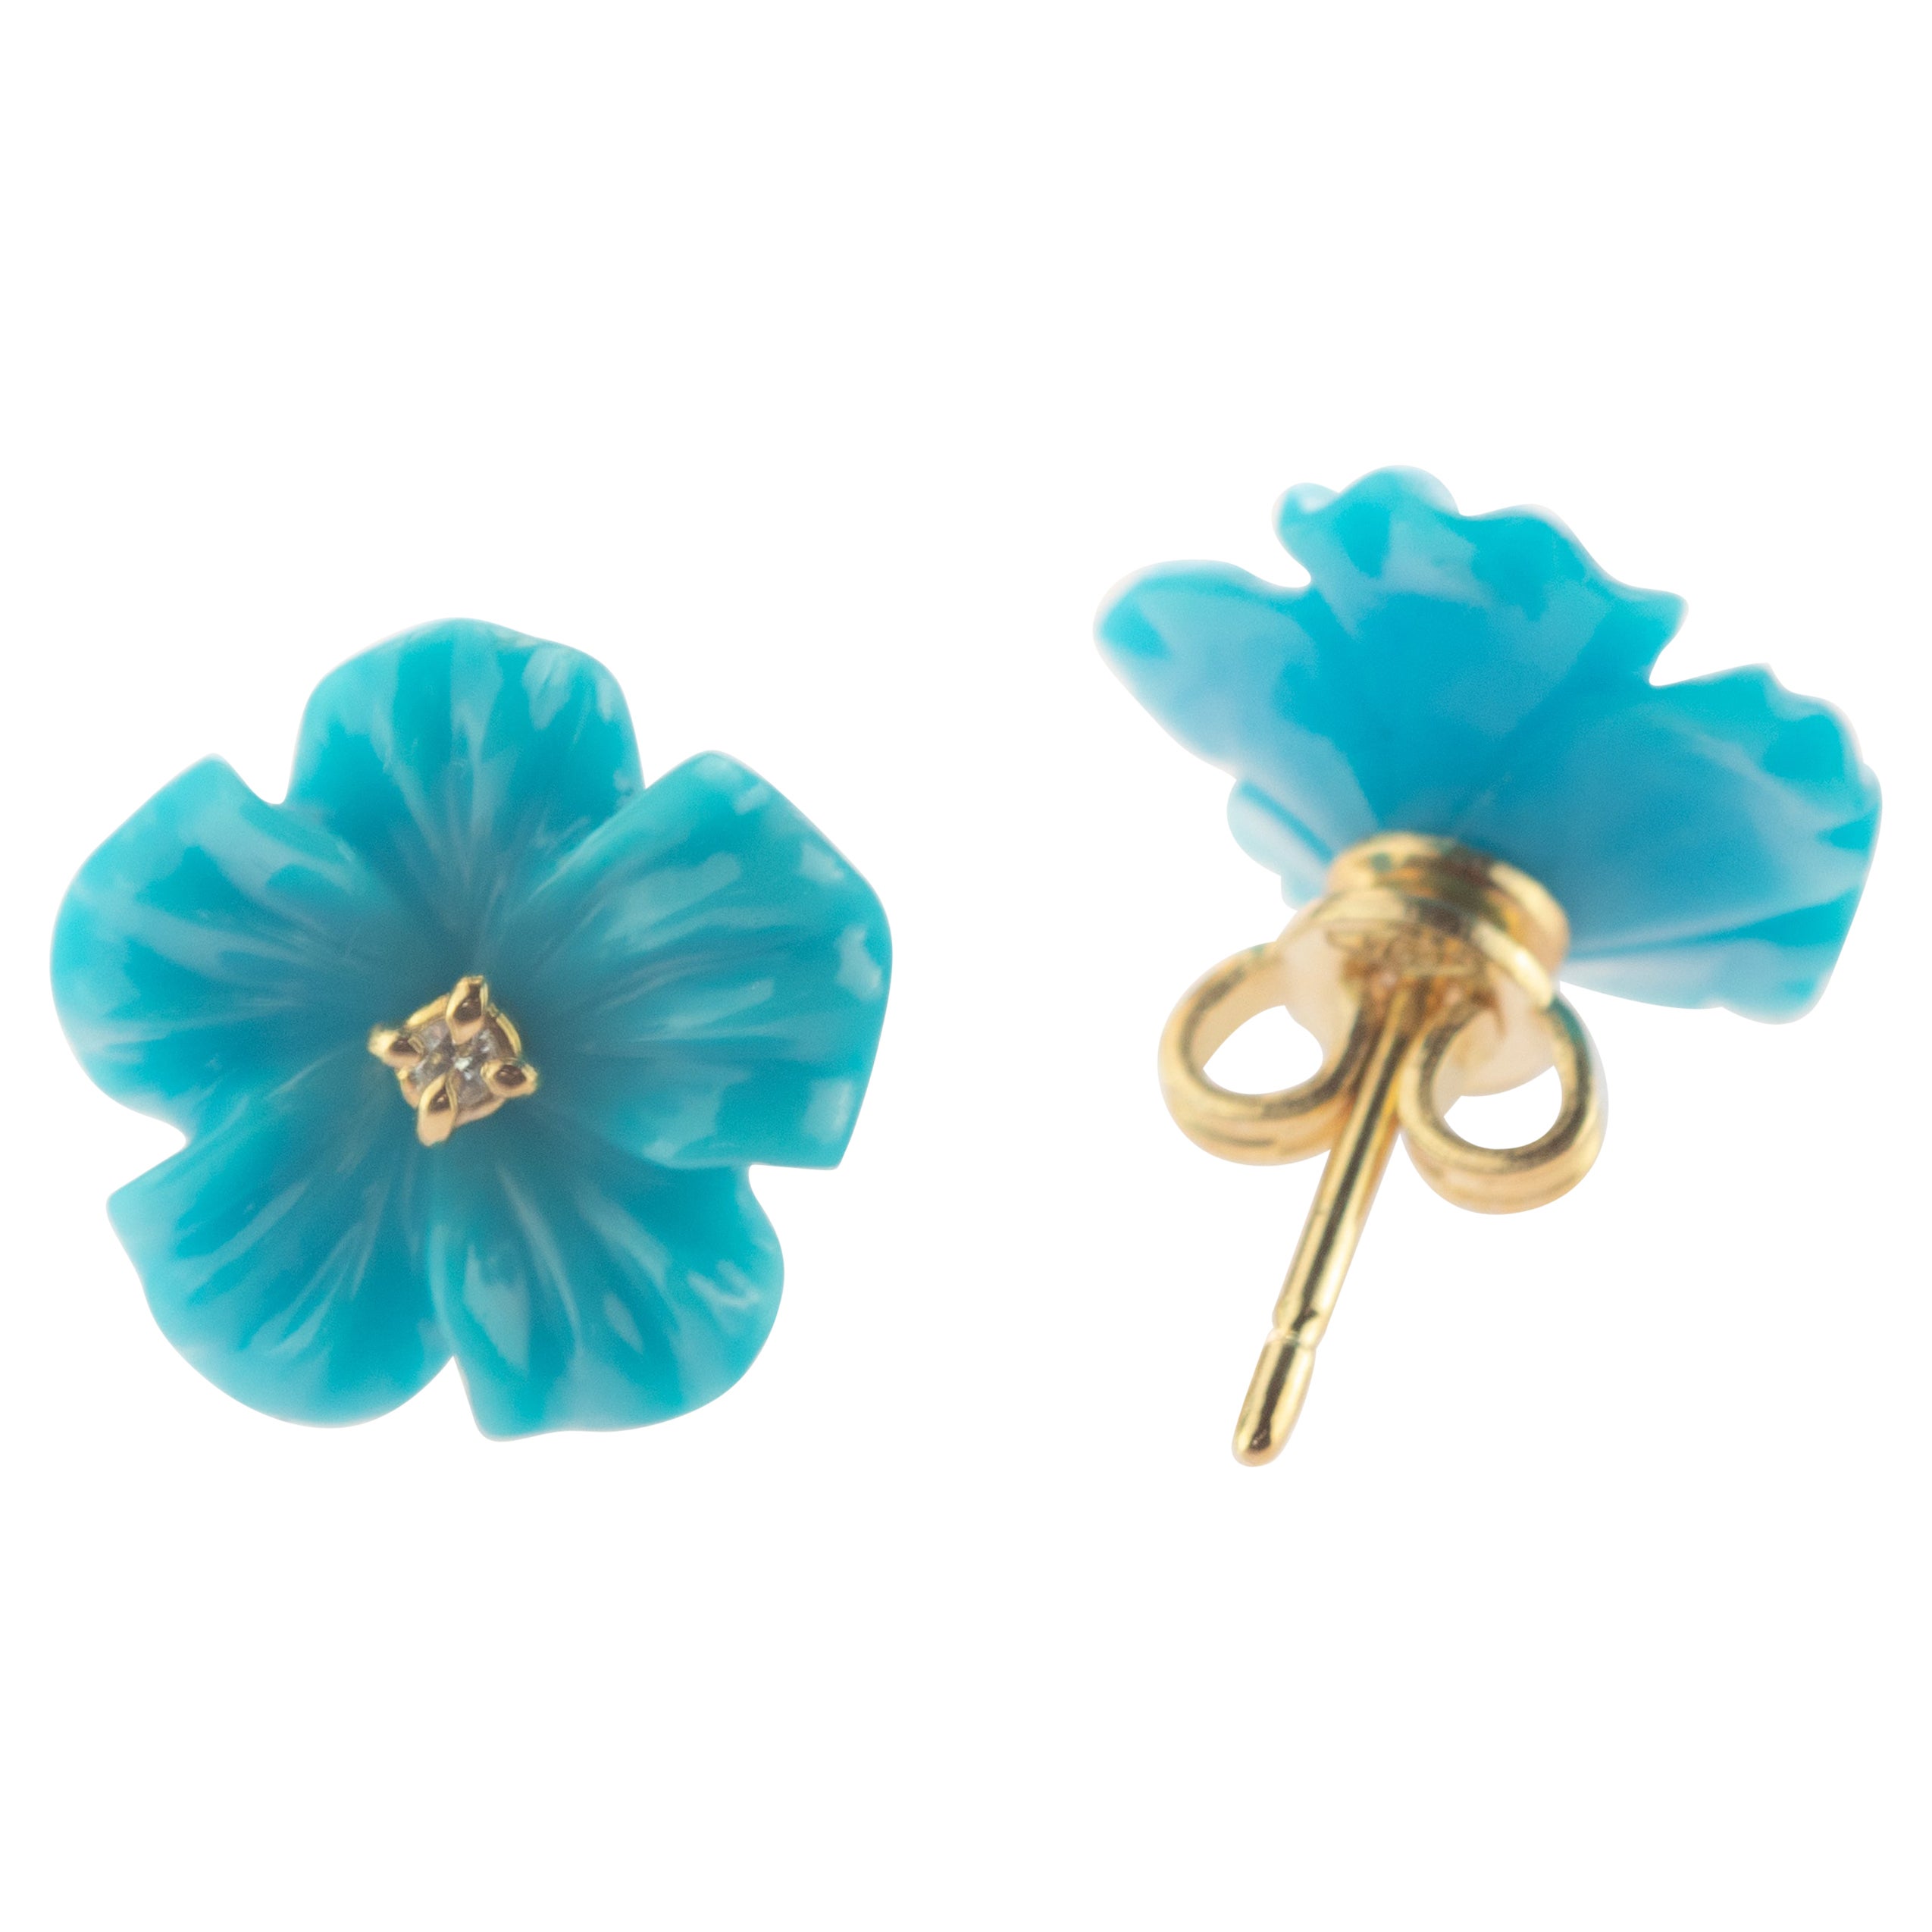 Tiny Flower Stud Earrings 10 MM Teal Blue Flowers On Wood Base Post Earrings